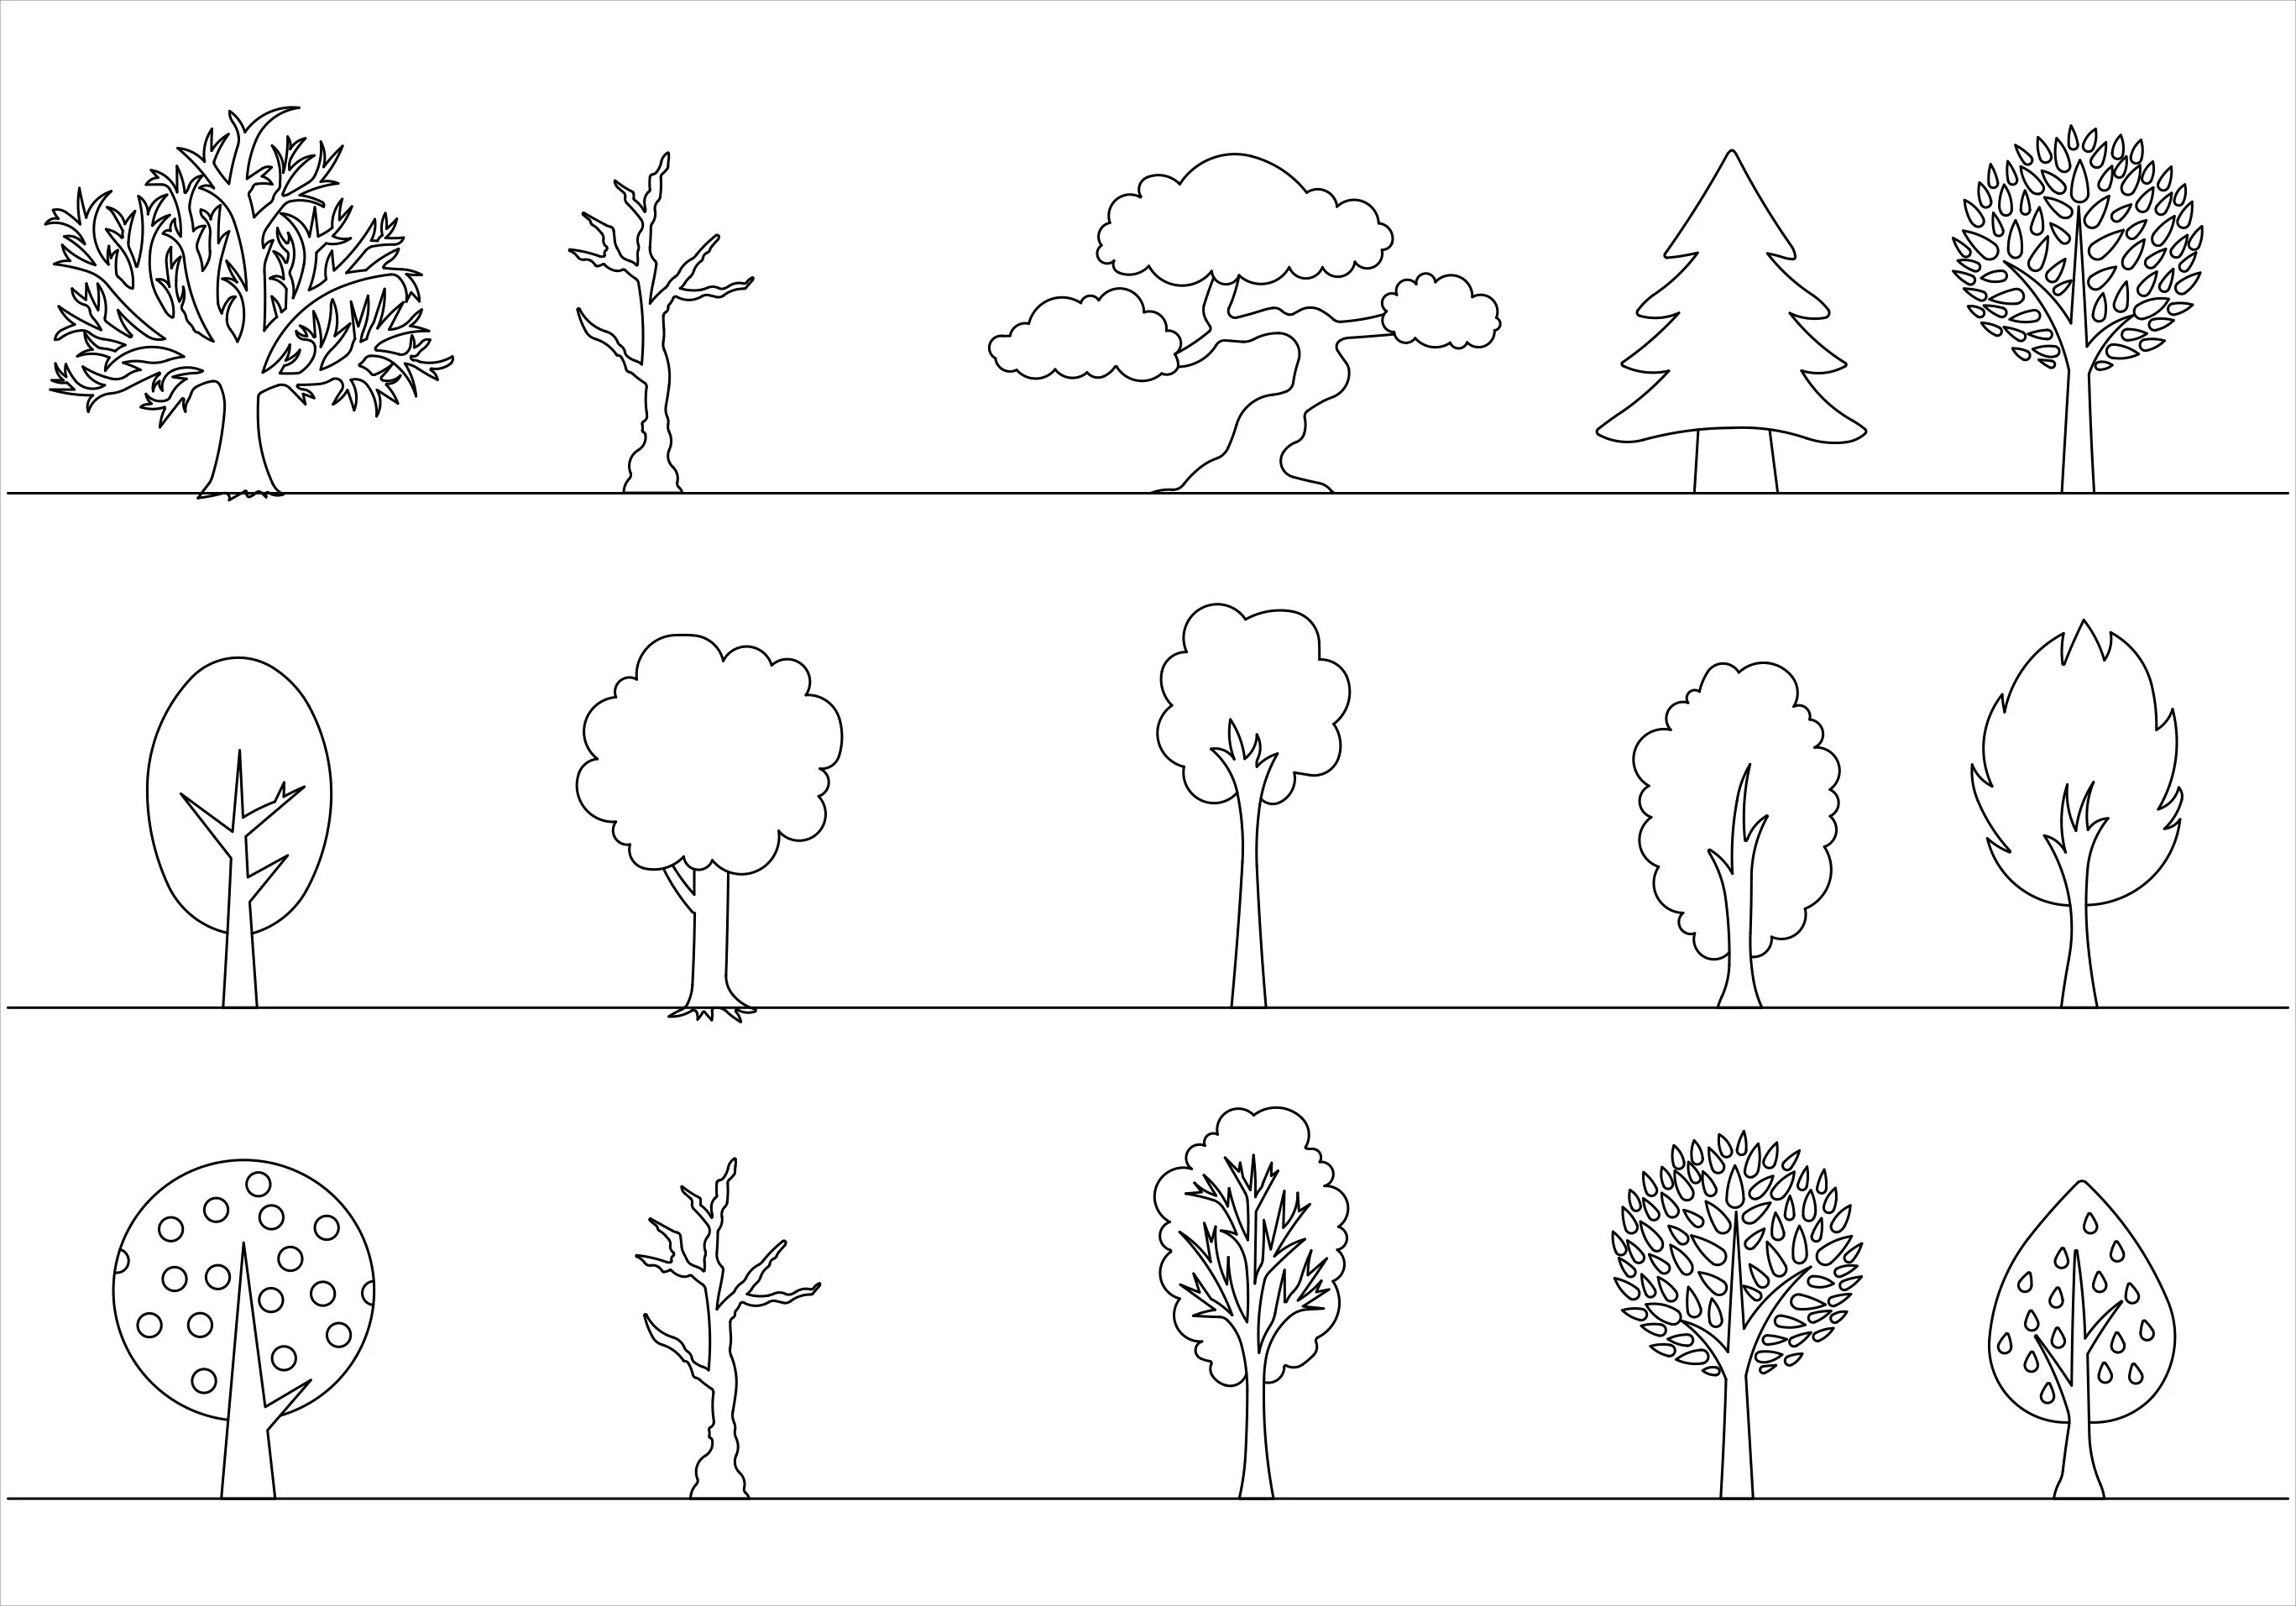 Дерево чертеж. Дерево чертеж сбоку. Деревья антураж сбоку. Дерево для рисования. Схематическое изображение дерева.